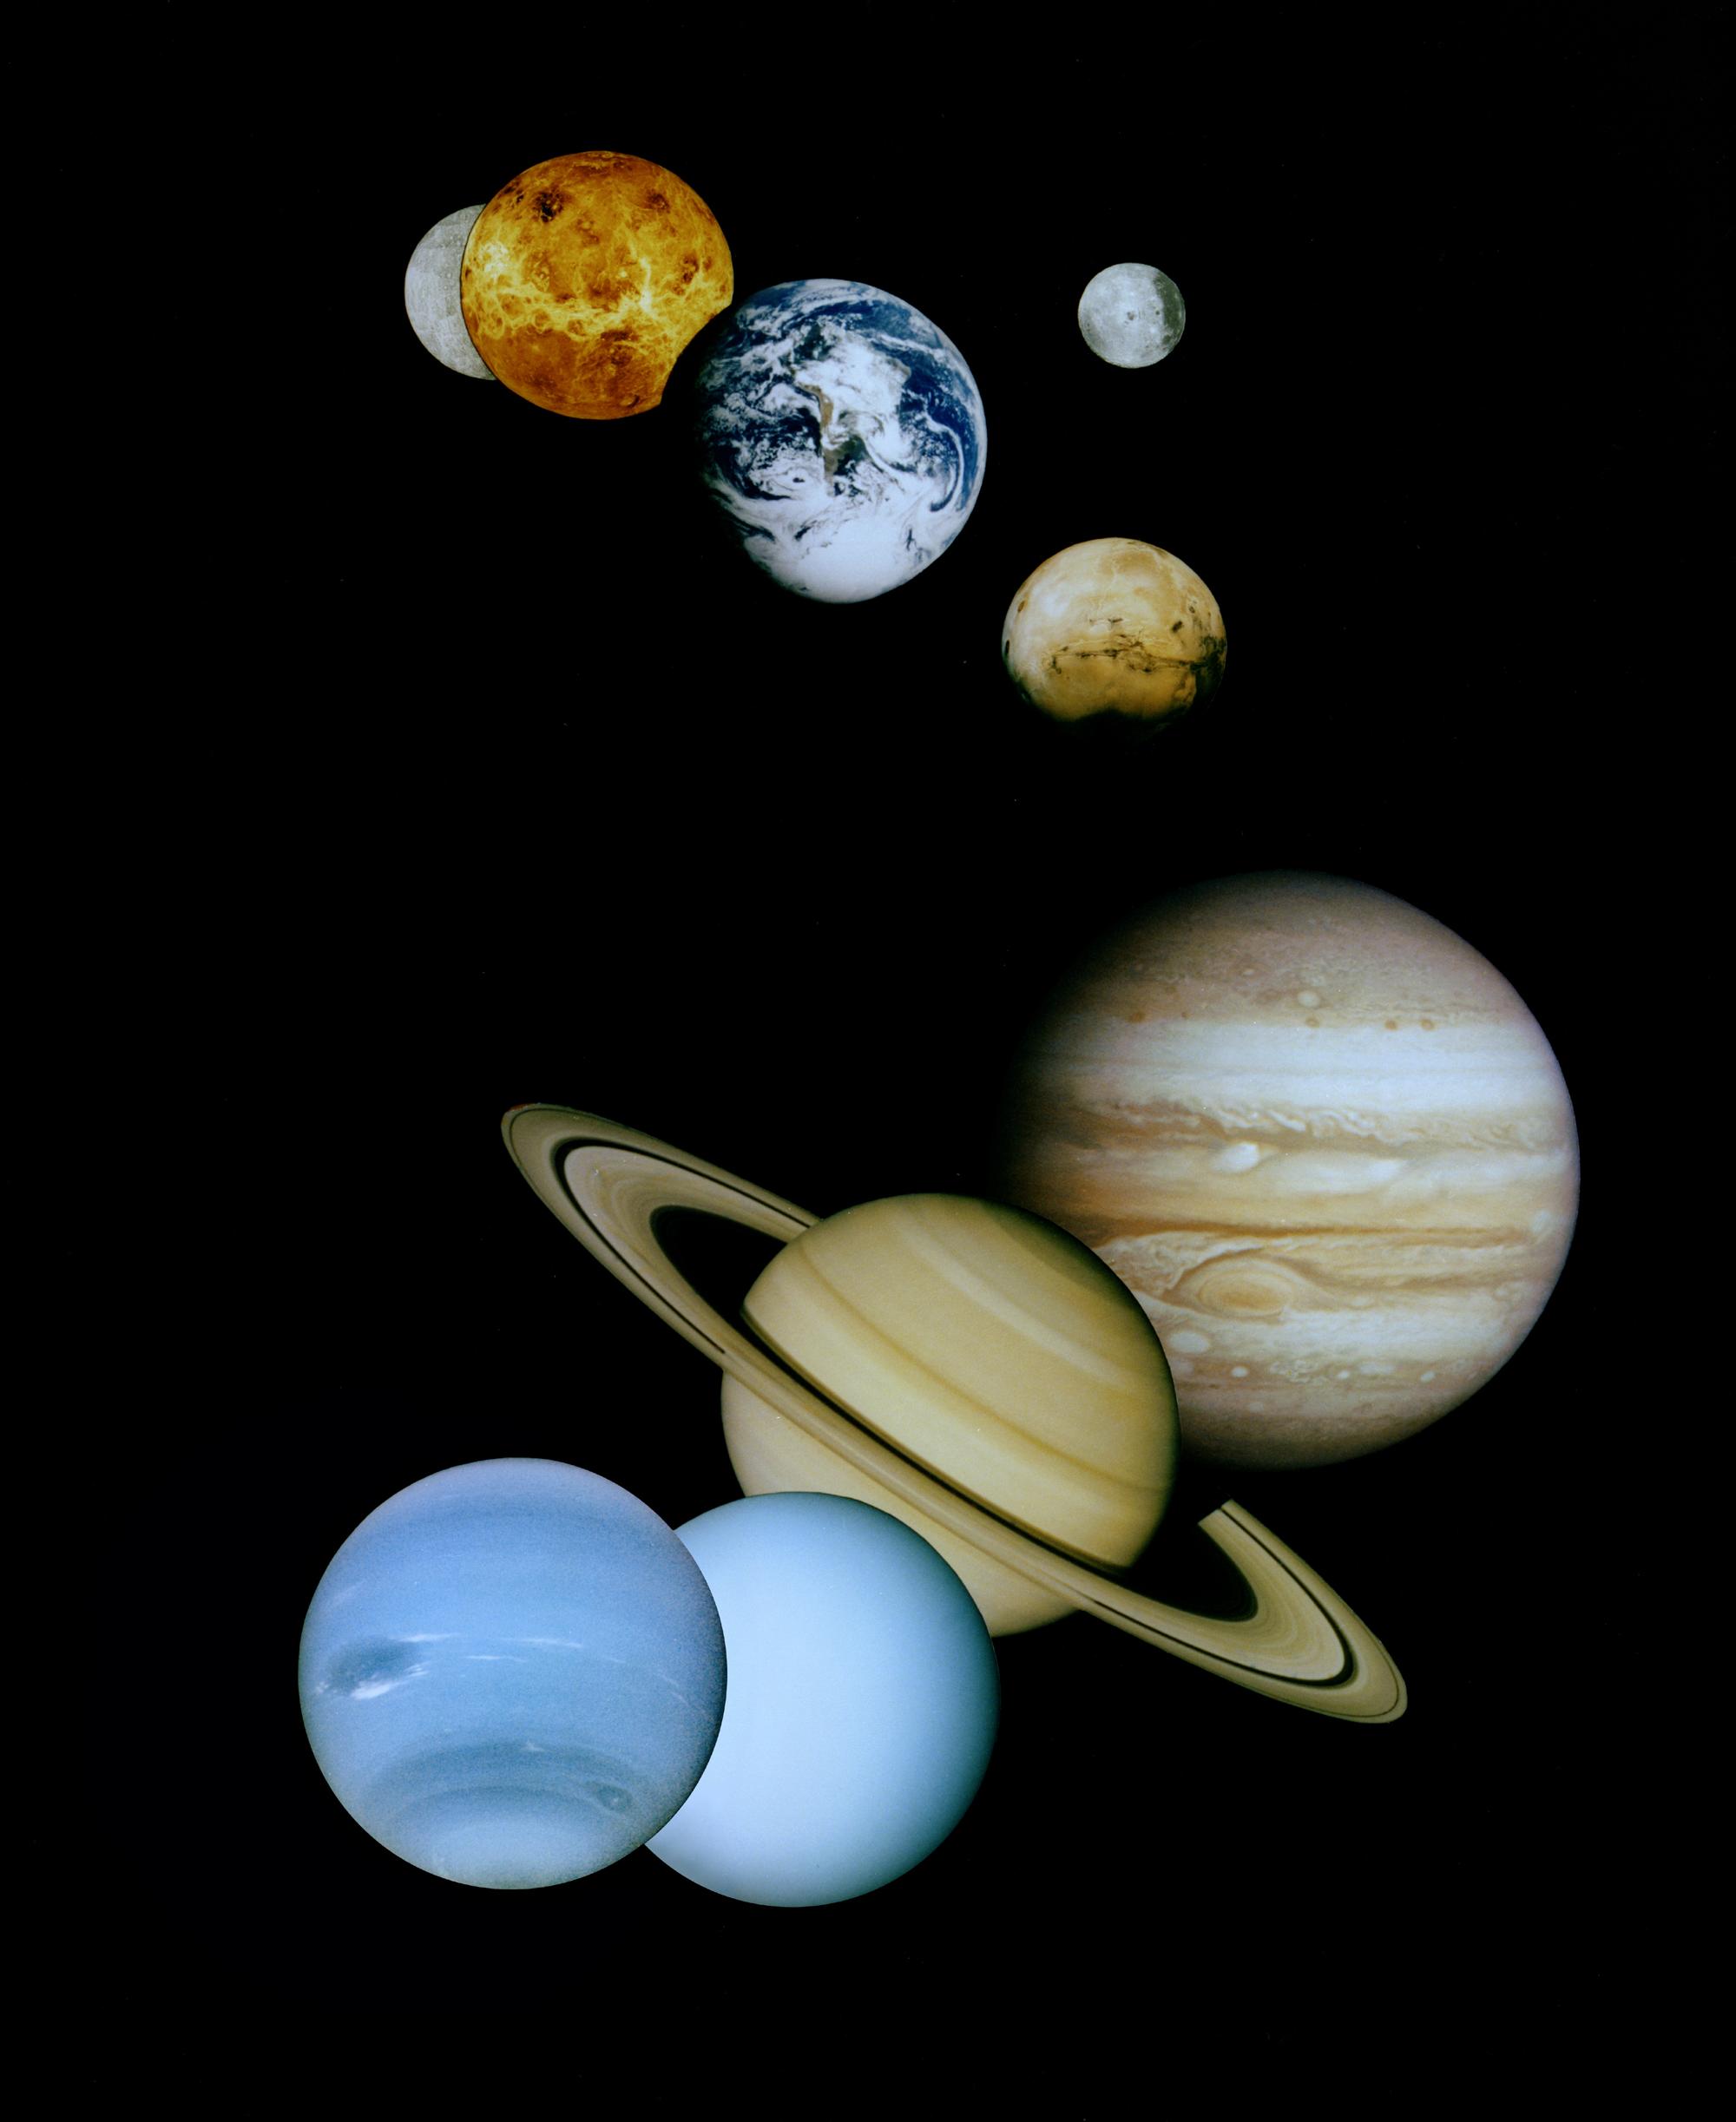 nasa solar system images